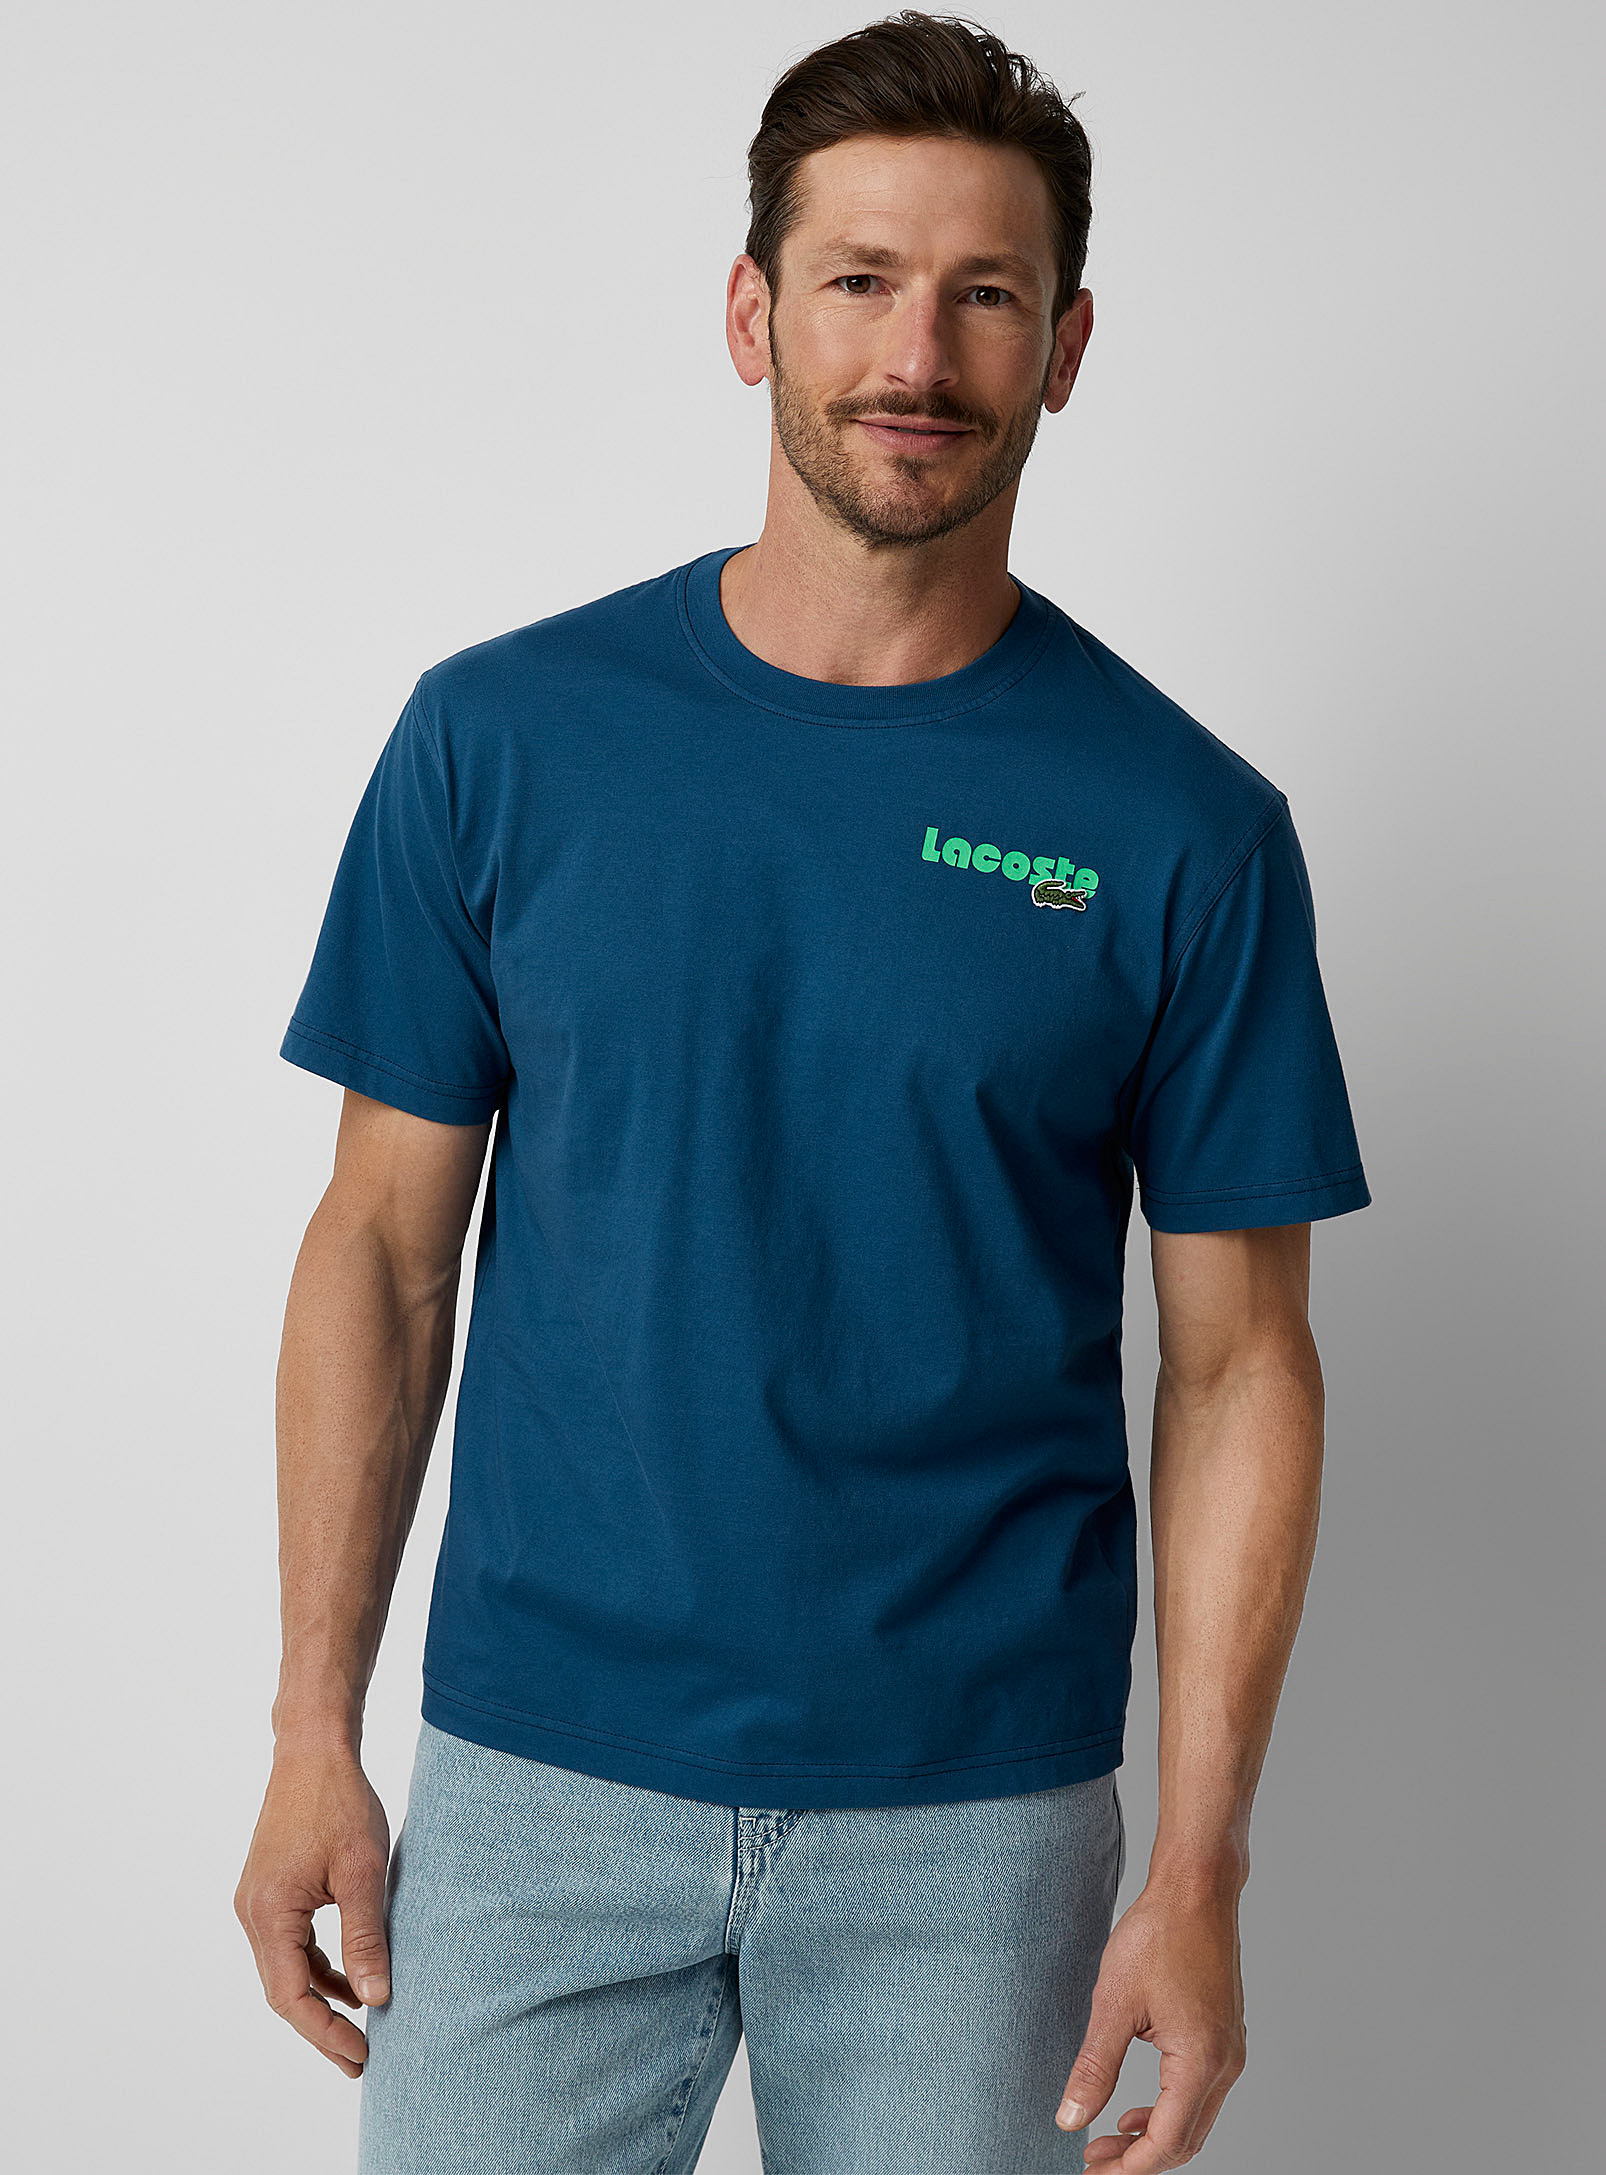 Lacoste - Men's Croc typographic logo T-shirt